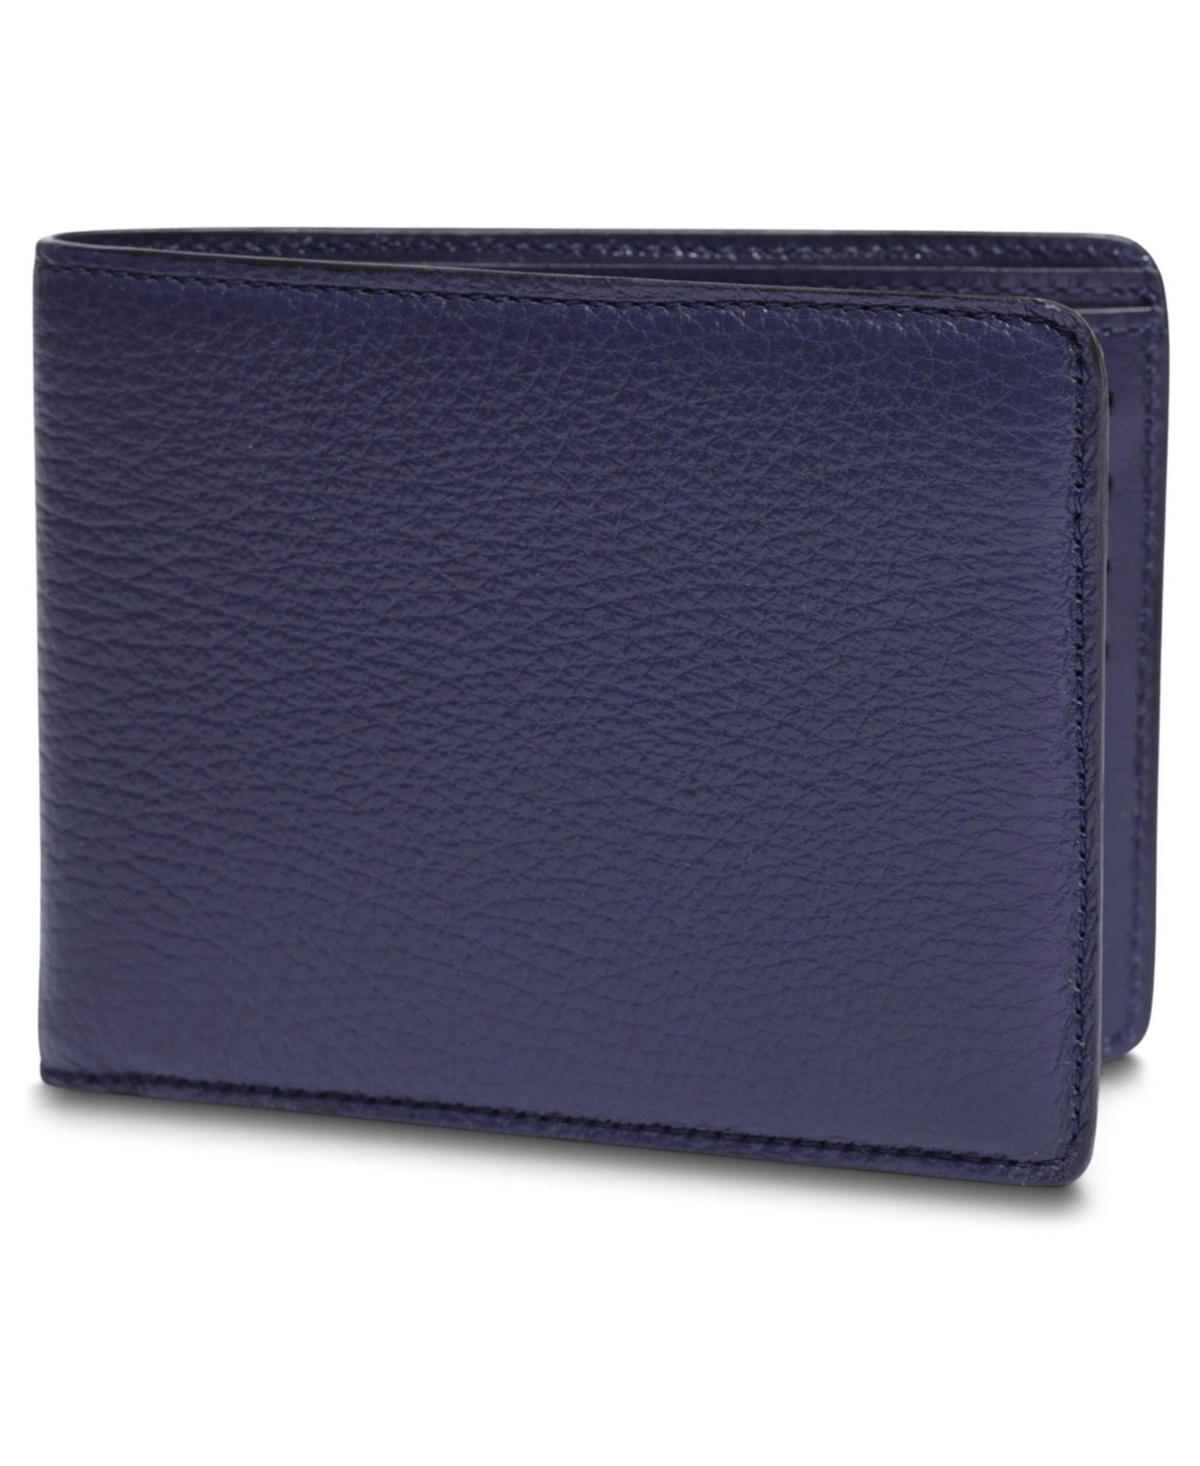 Italia Slim 8-Slot Men's Pocket Wallet Made In Italy, Monfrini Collection - Dark blue